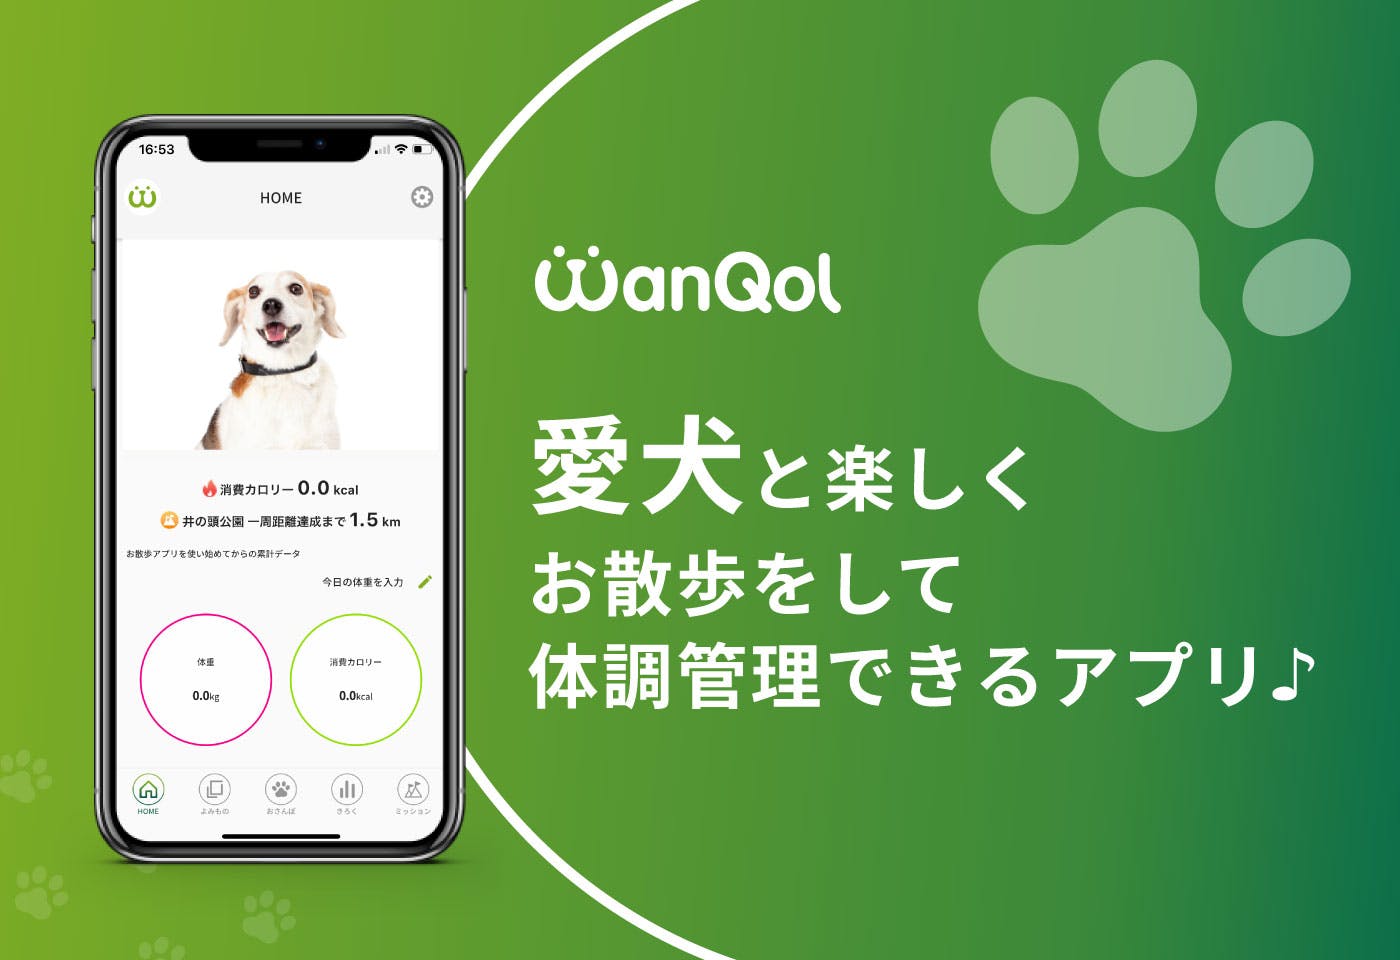 WanQolにアプリが登場！愛犬と楽しくお散歩をして体調管理しよう♪